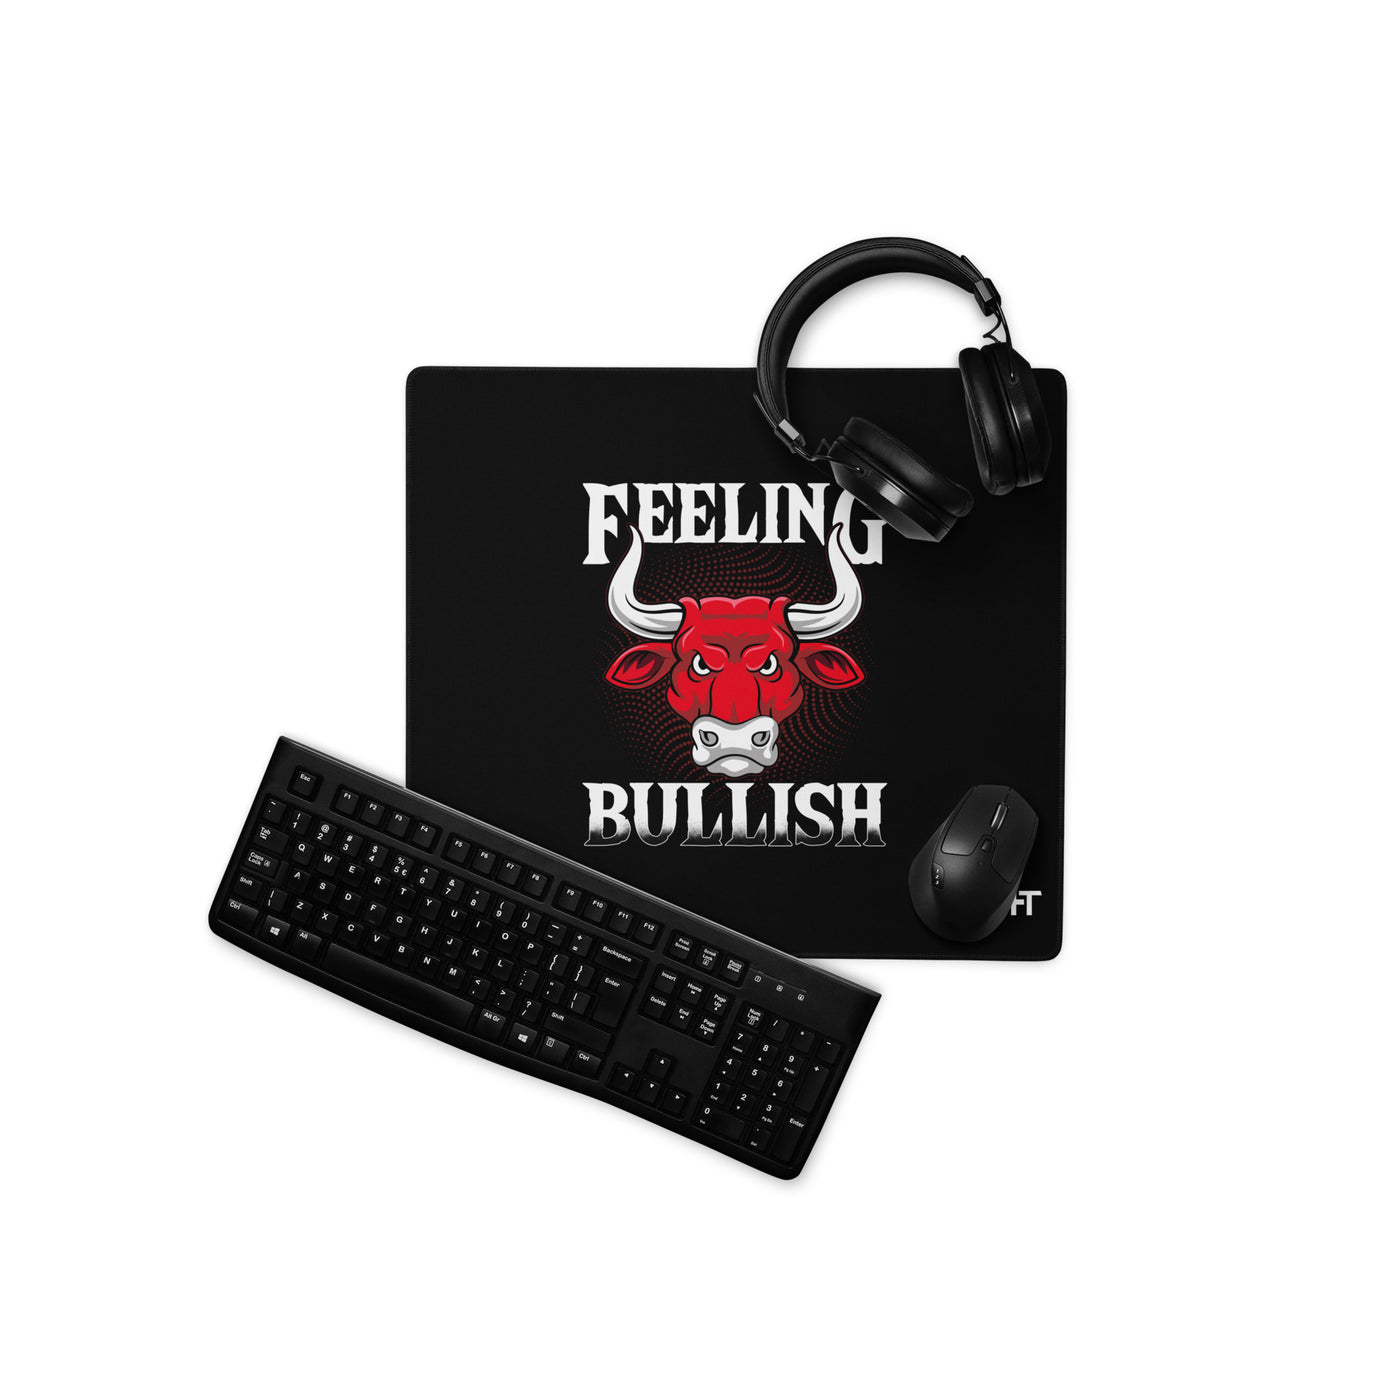 Feeling Bullish - Desk Mat